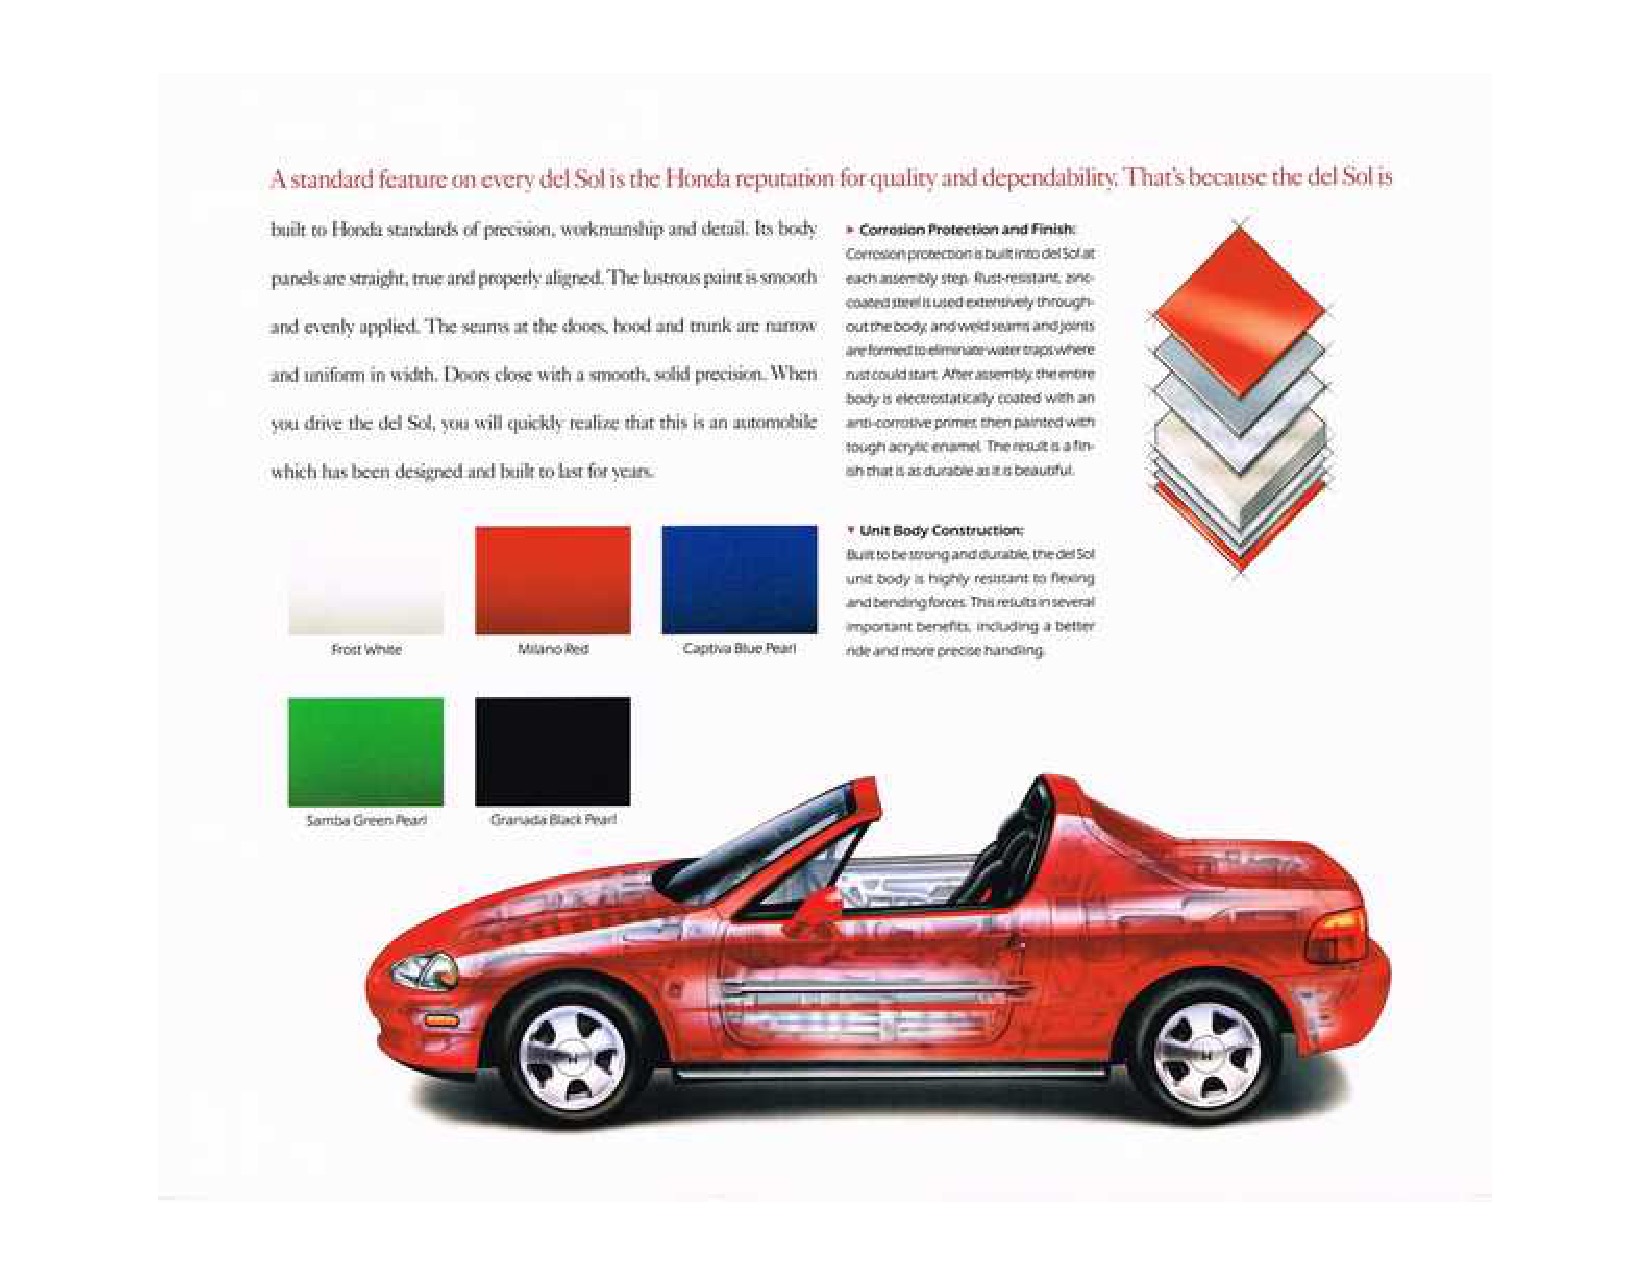 1993 Honda Civic delSol Brochure Page 22